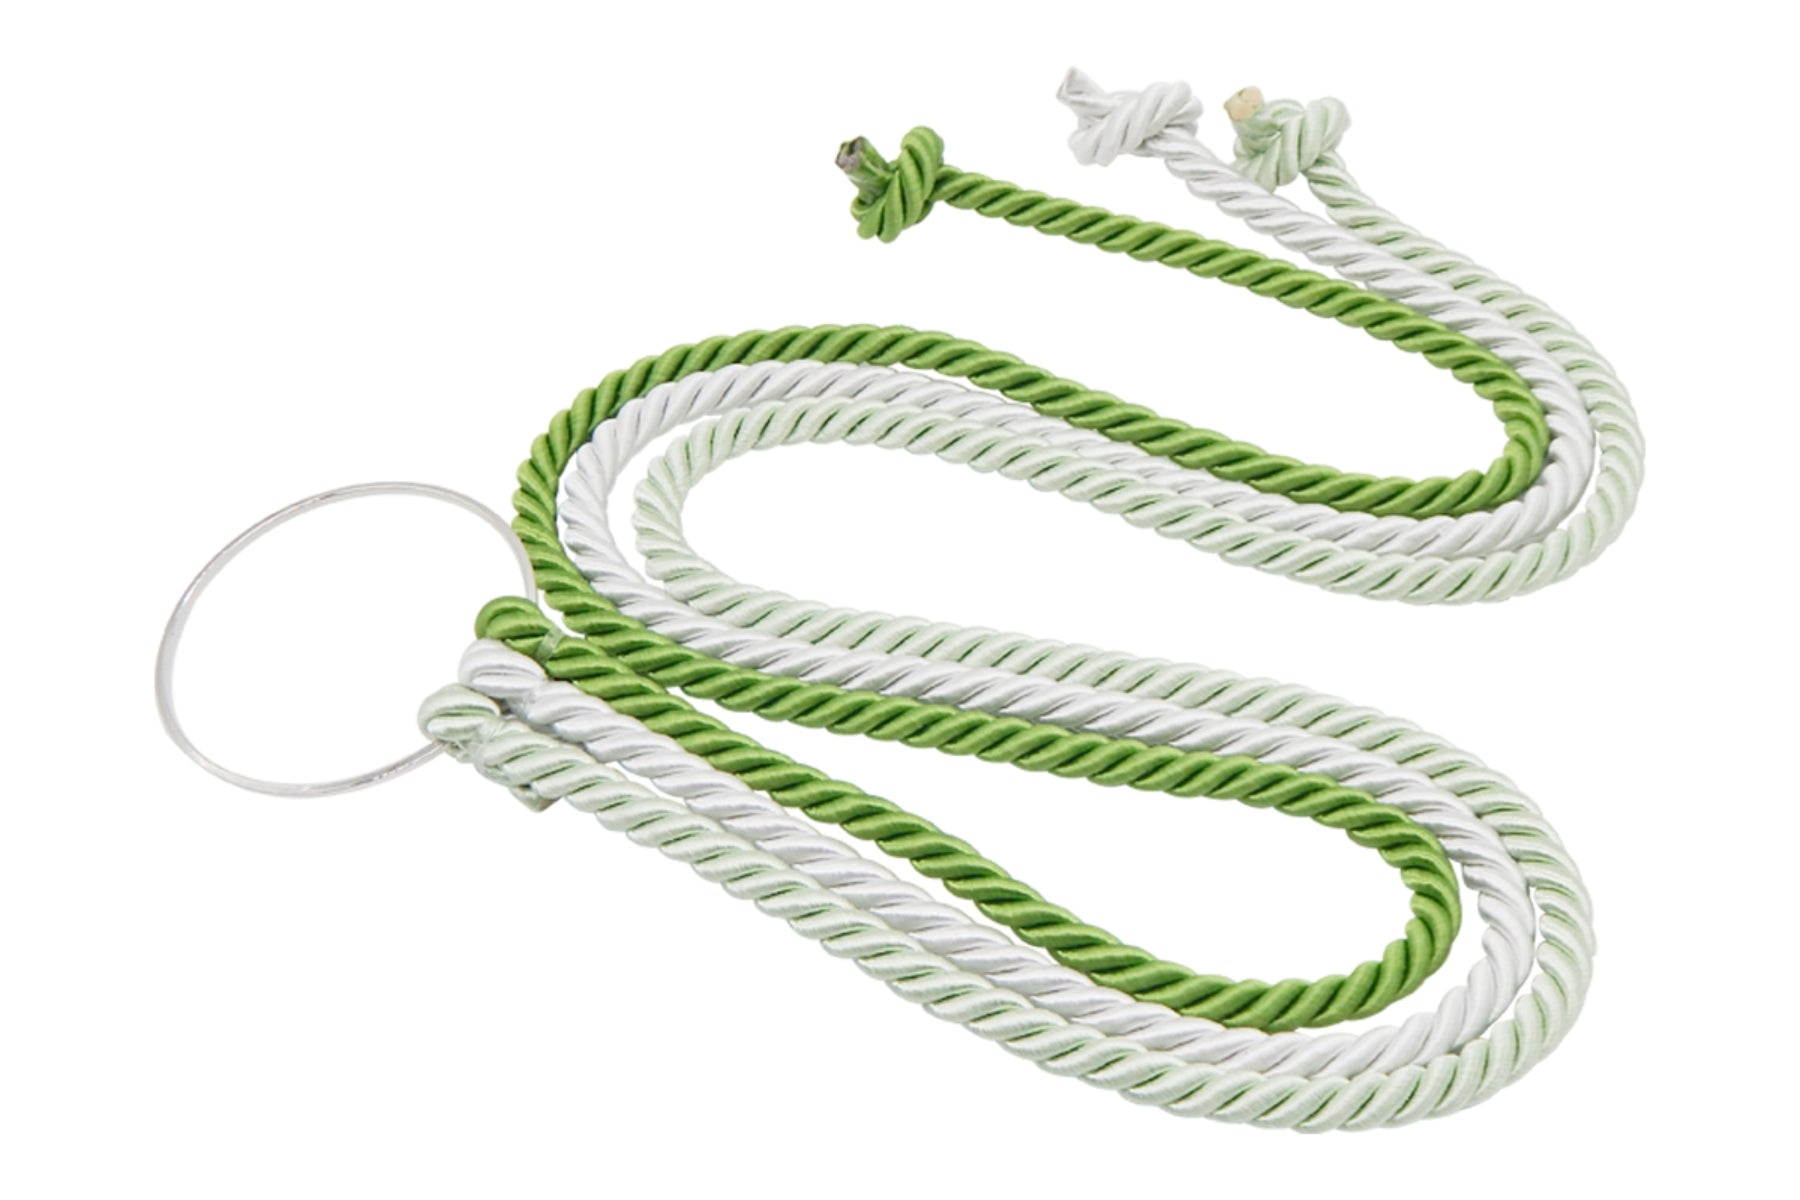 Cord Of Three Strands, Unity Braids®, Tying The Knot, Wedding Gift, Wedding Ideas, On Sale! - Unity Braids